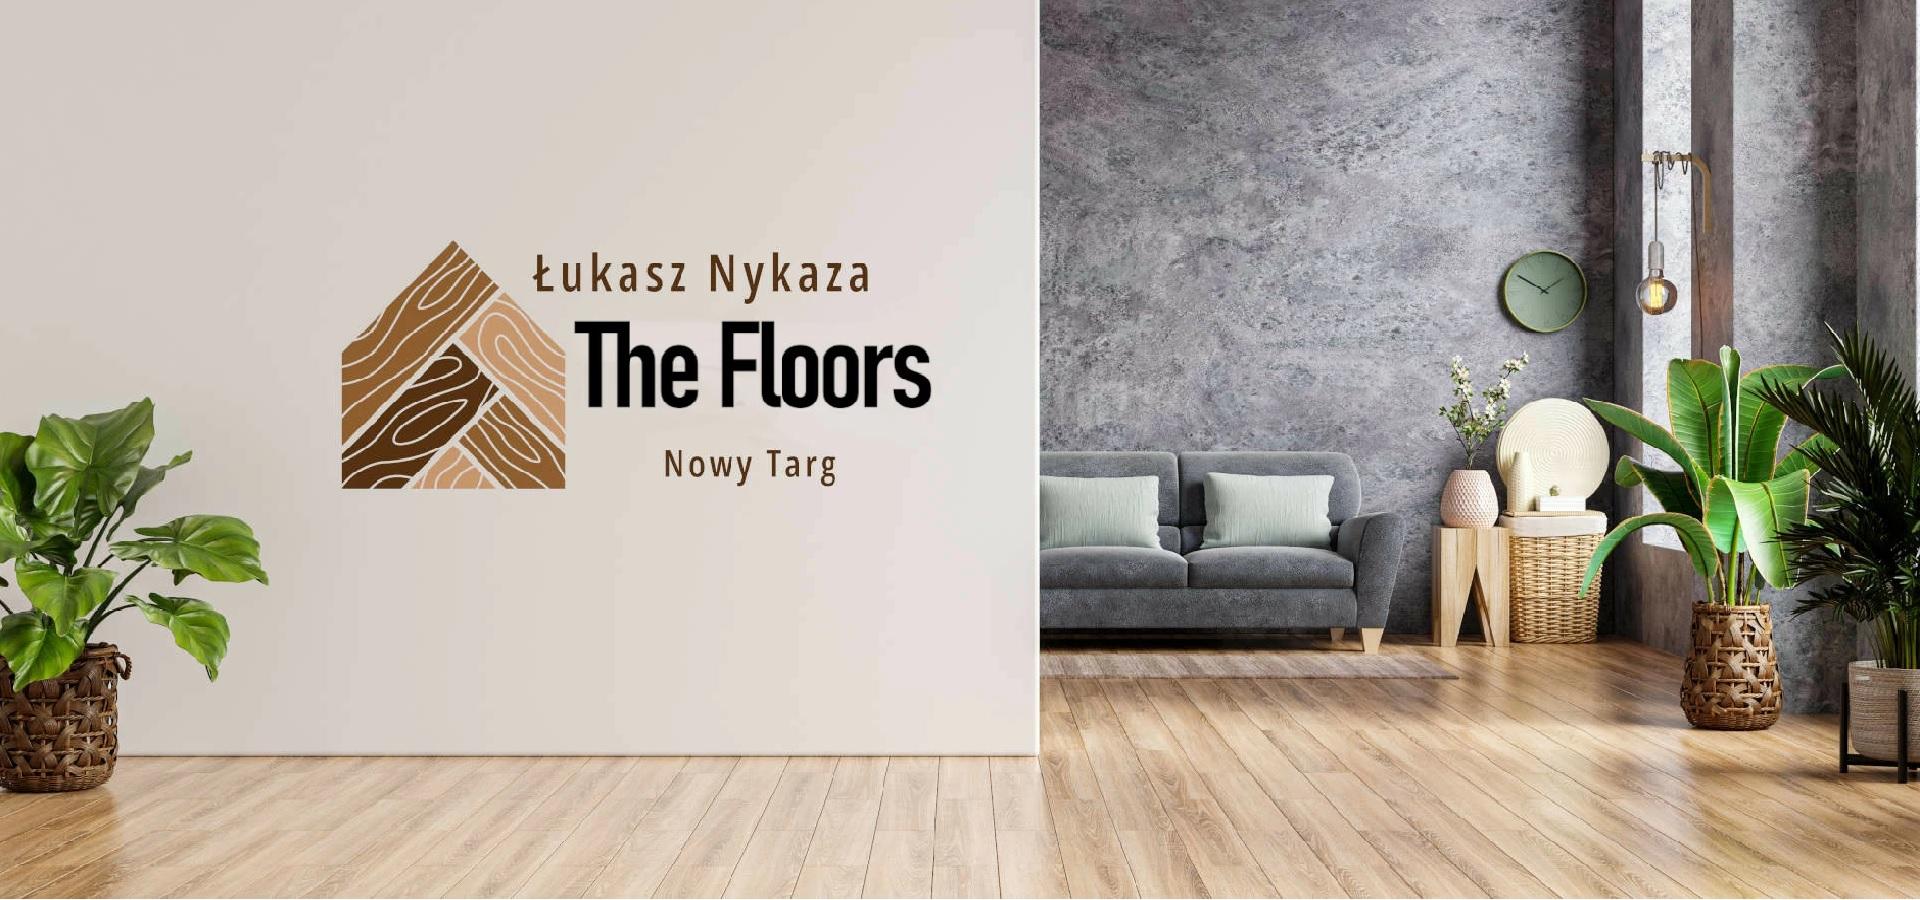 The Floors Łukasz Nykaza-logo